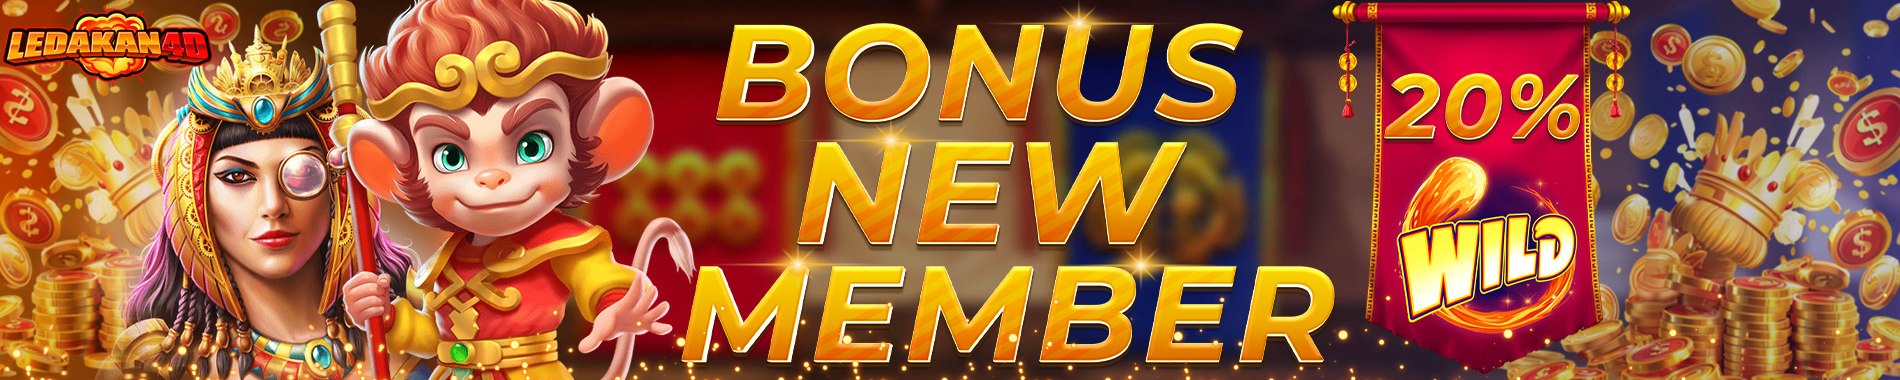 Bonus-New-Member-20%